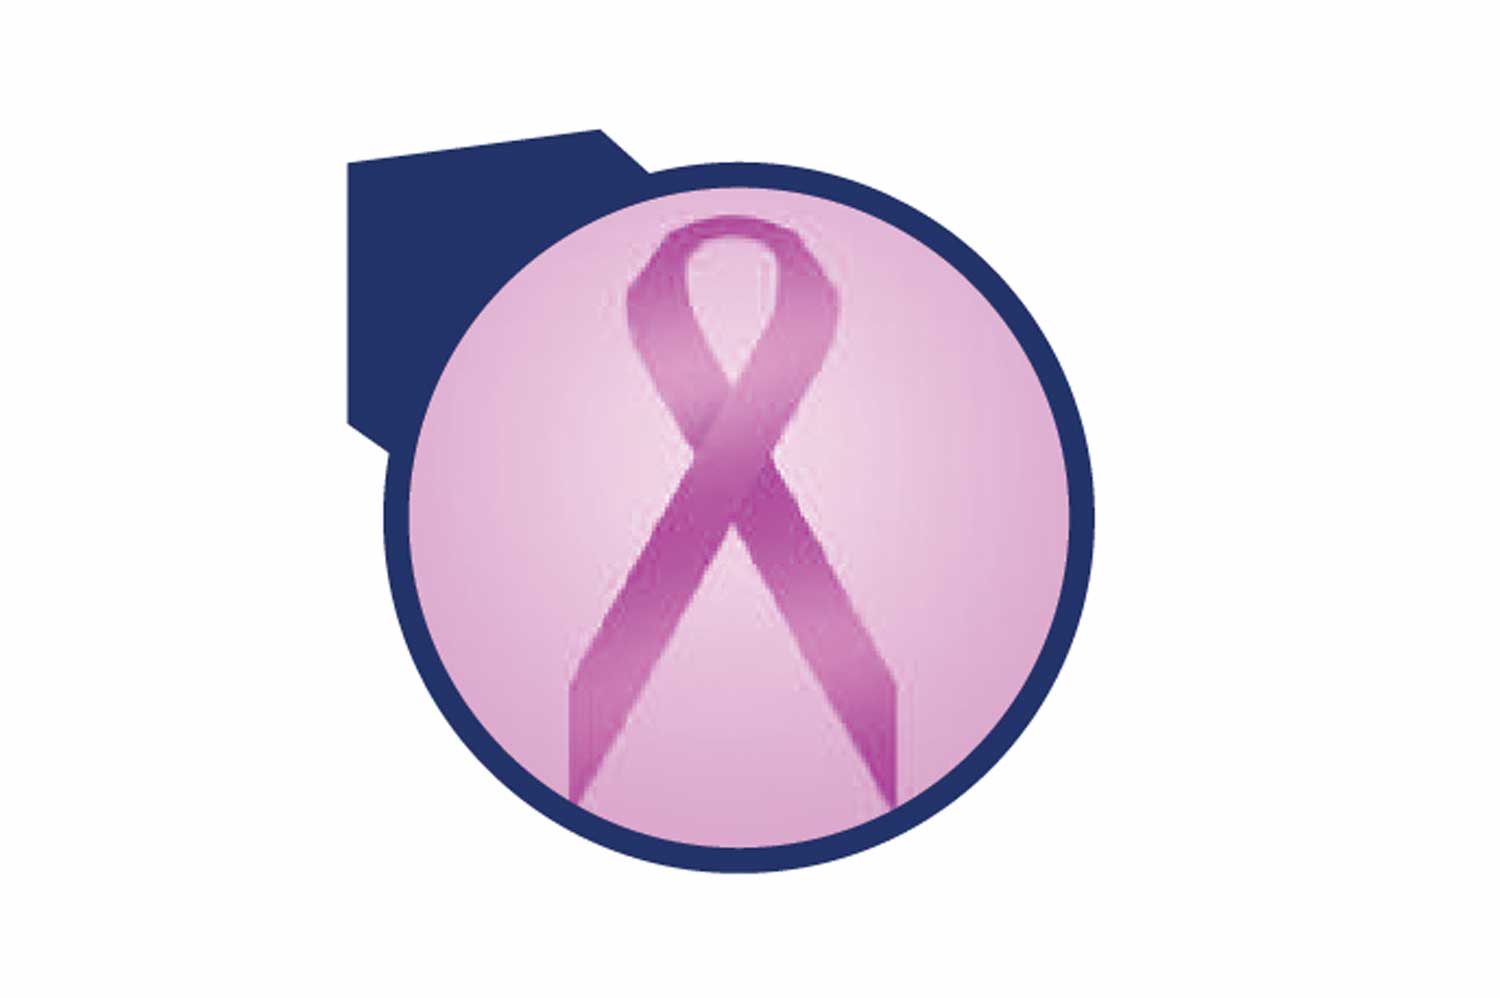 Screening mammograms